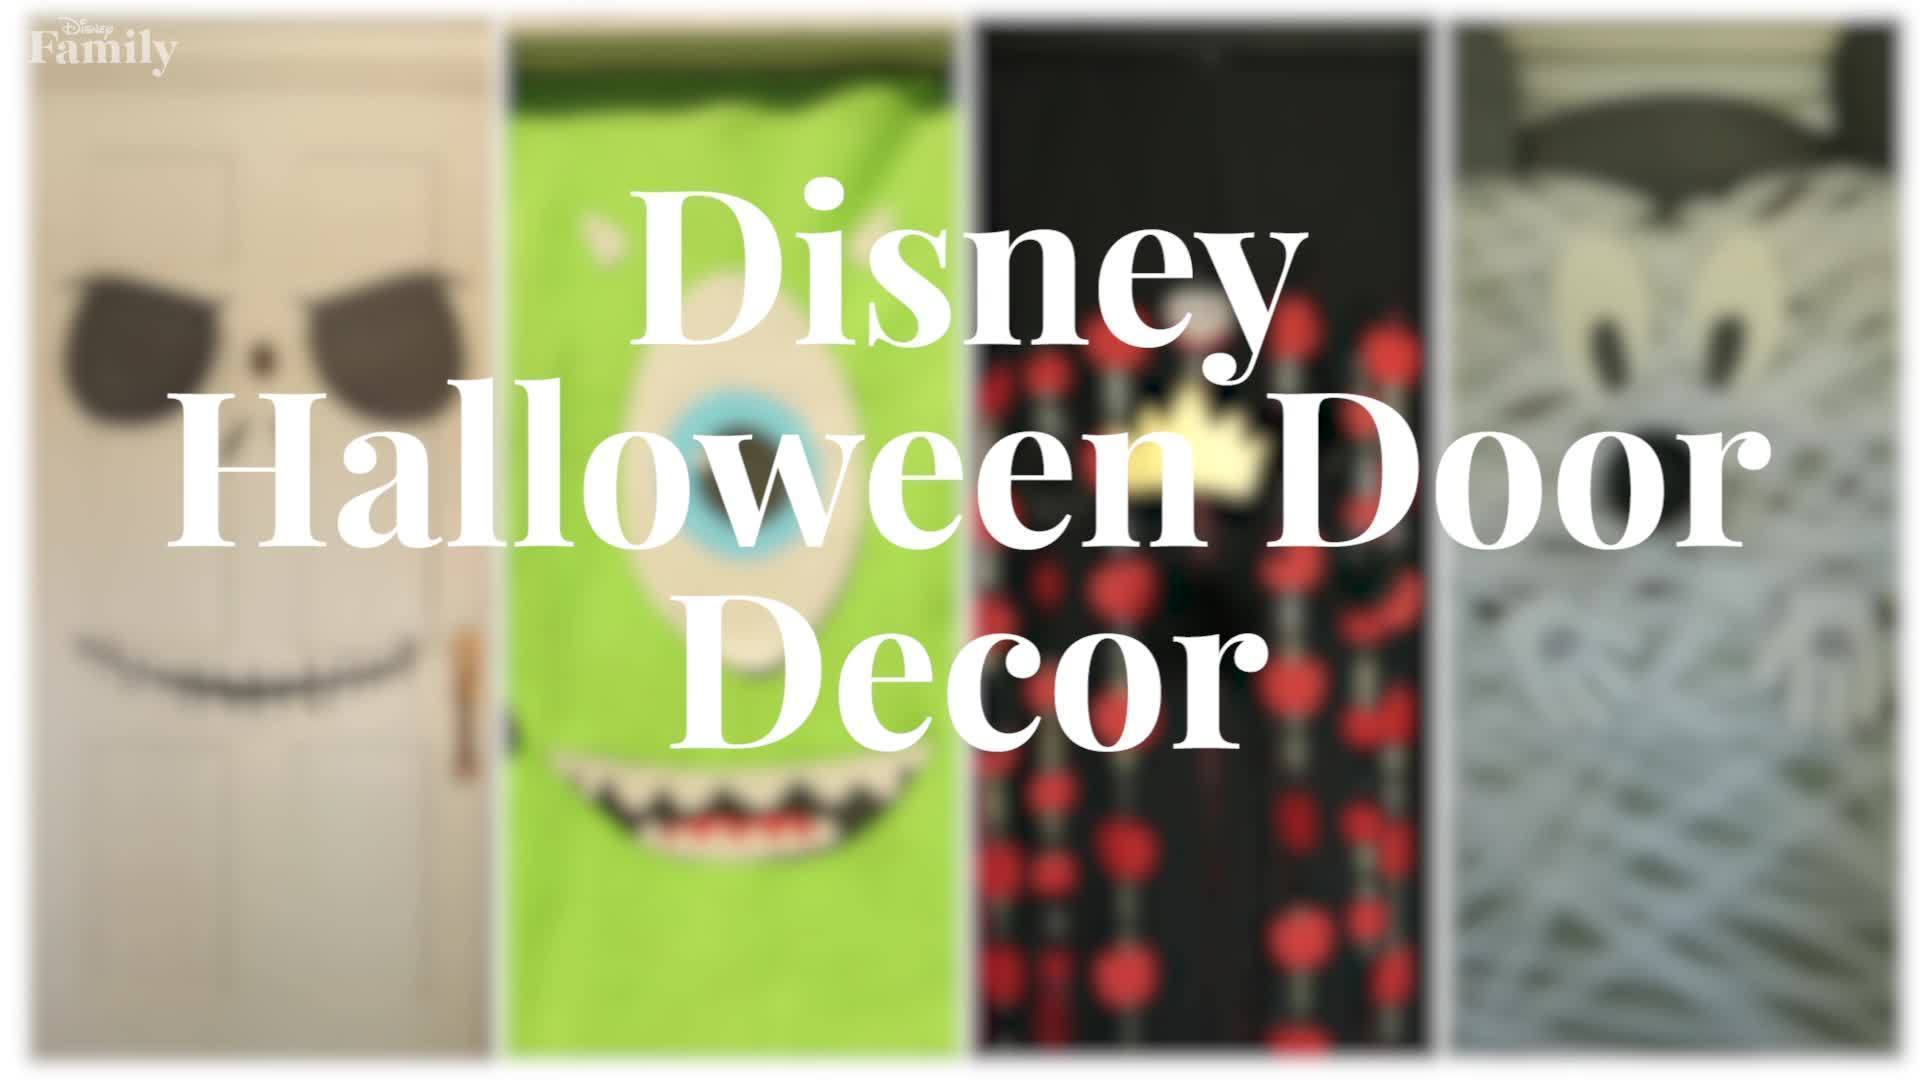 Disney Halloween Door Decor Four Ways | Disney Family